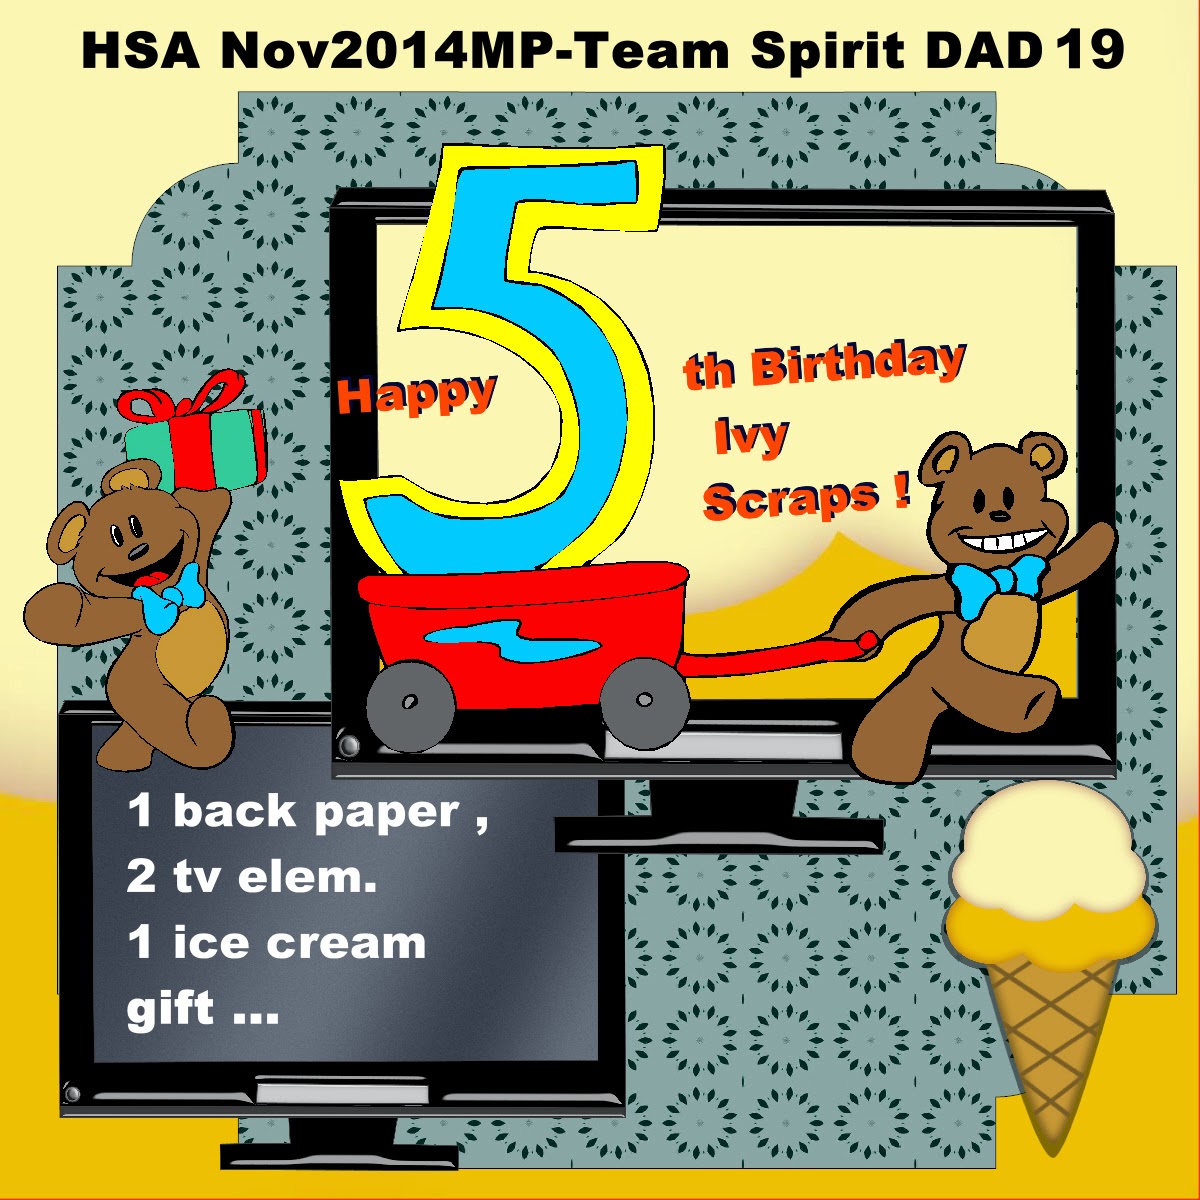 HSA Nov2014MP-Team Spirit DAD 19